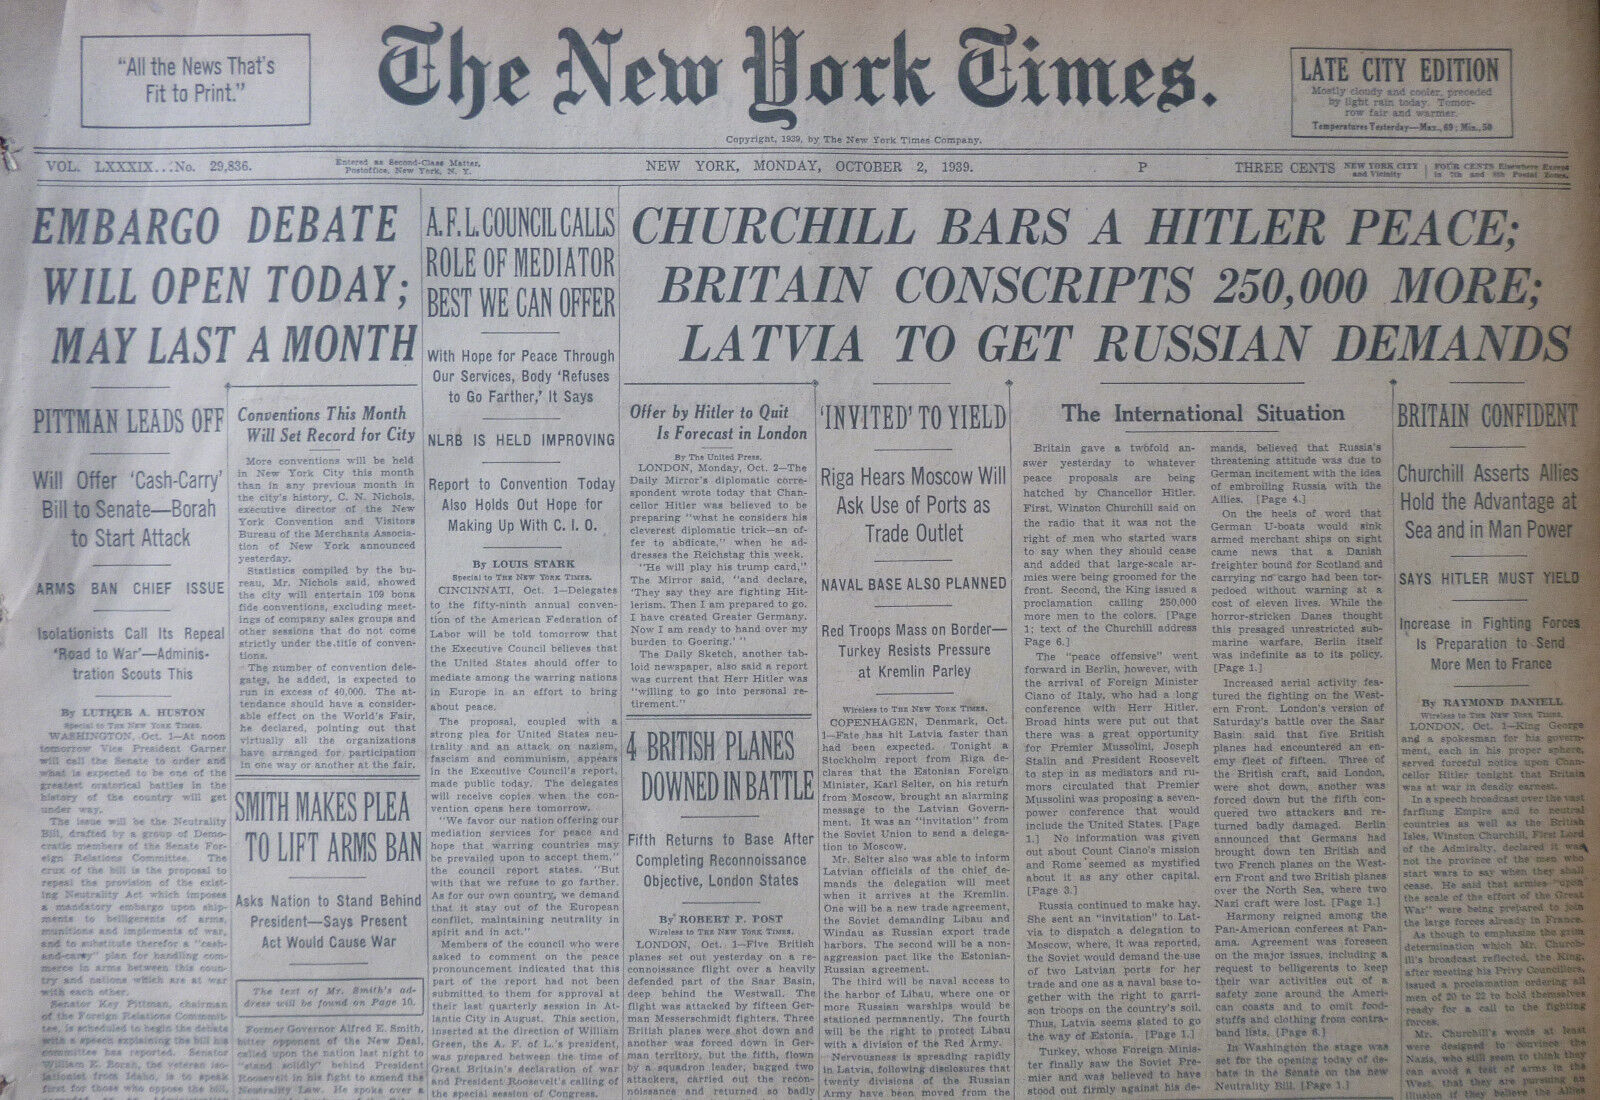 10-1939 WWII October 2 CHURCHILL BARS HITLER PEACE EMBARGO DEBATE LATVIA RUSSIA